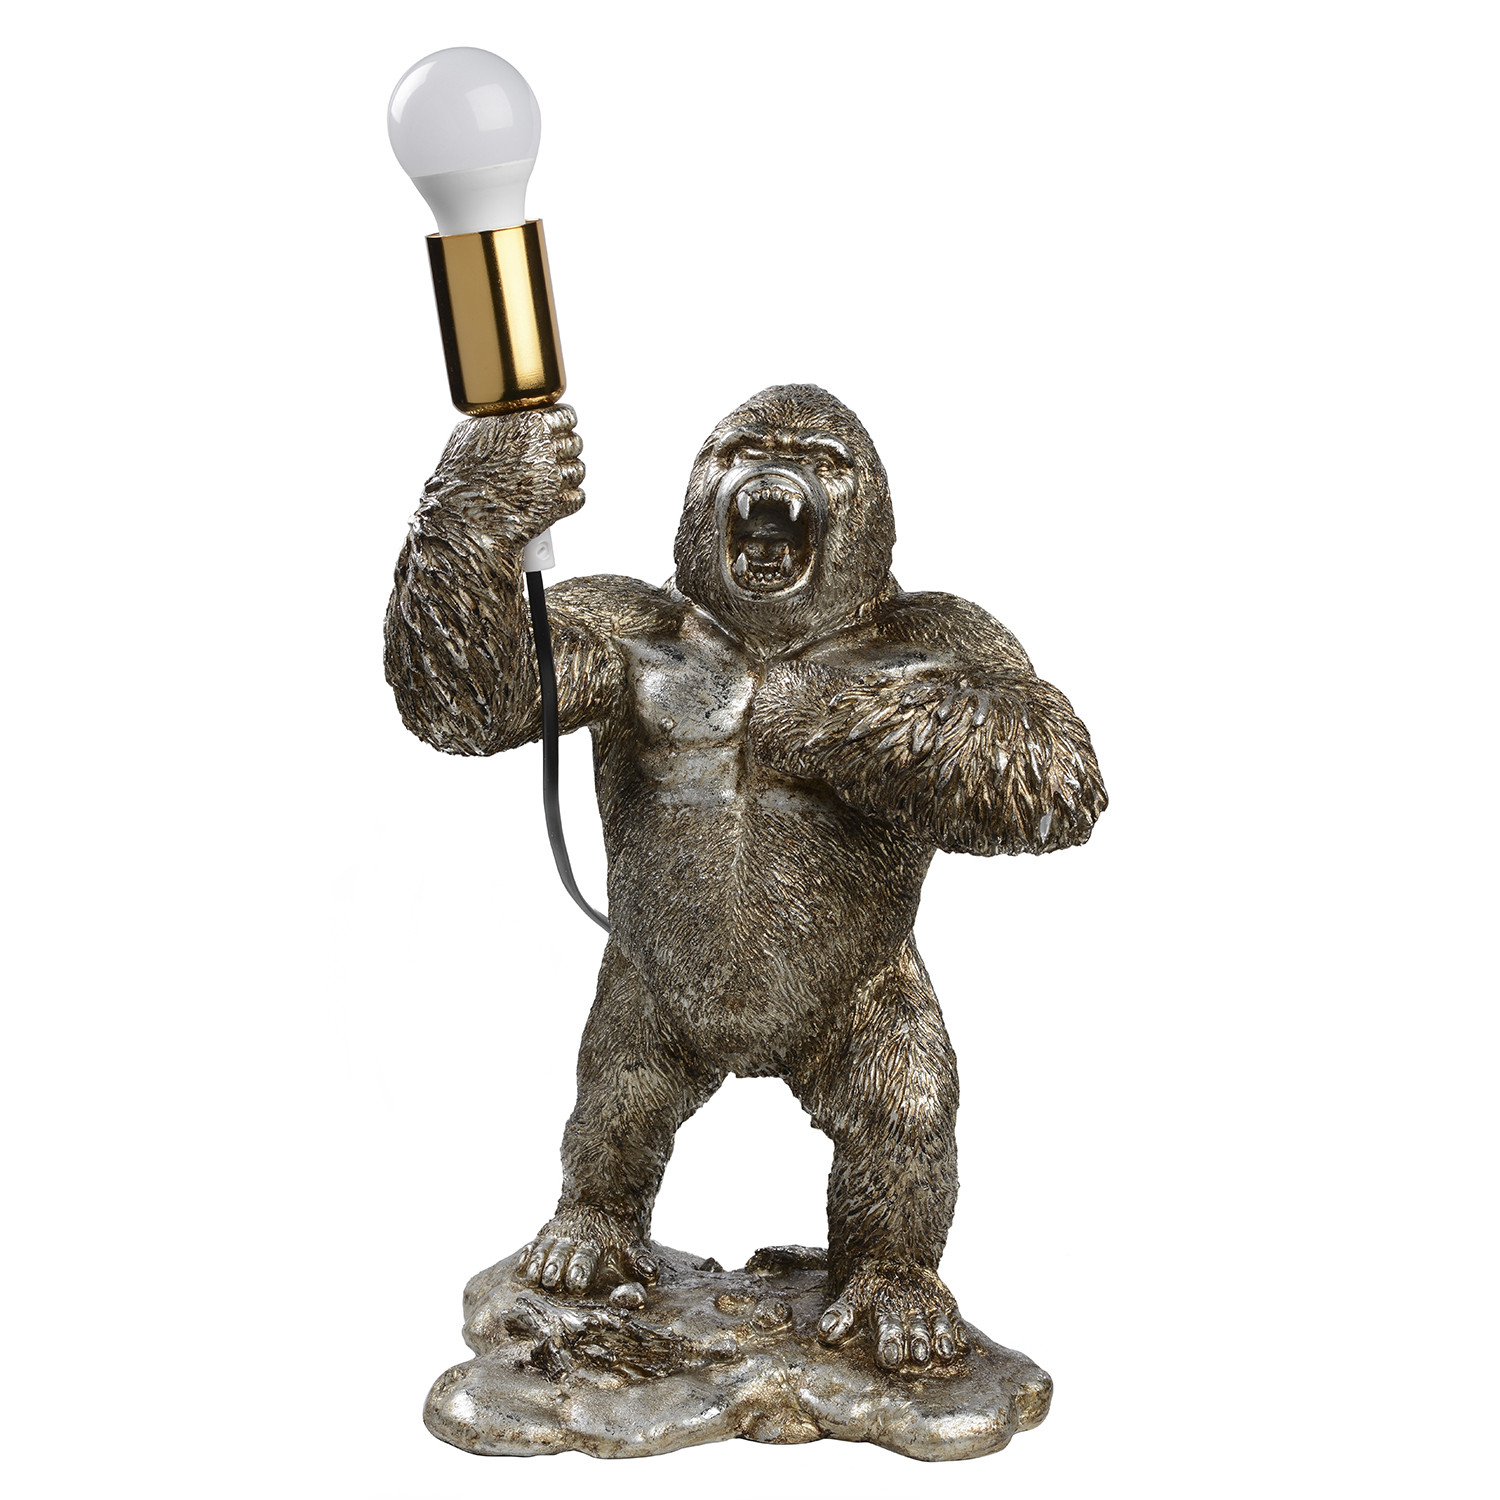 gorilla hologram lamp